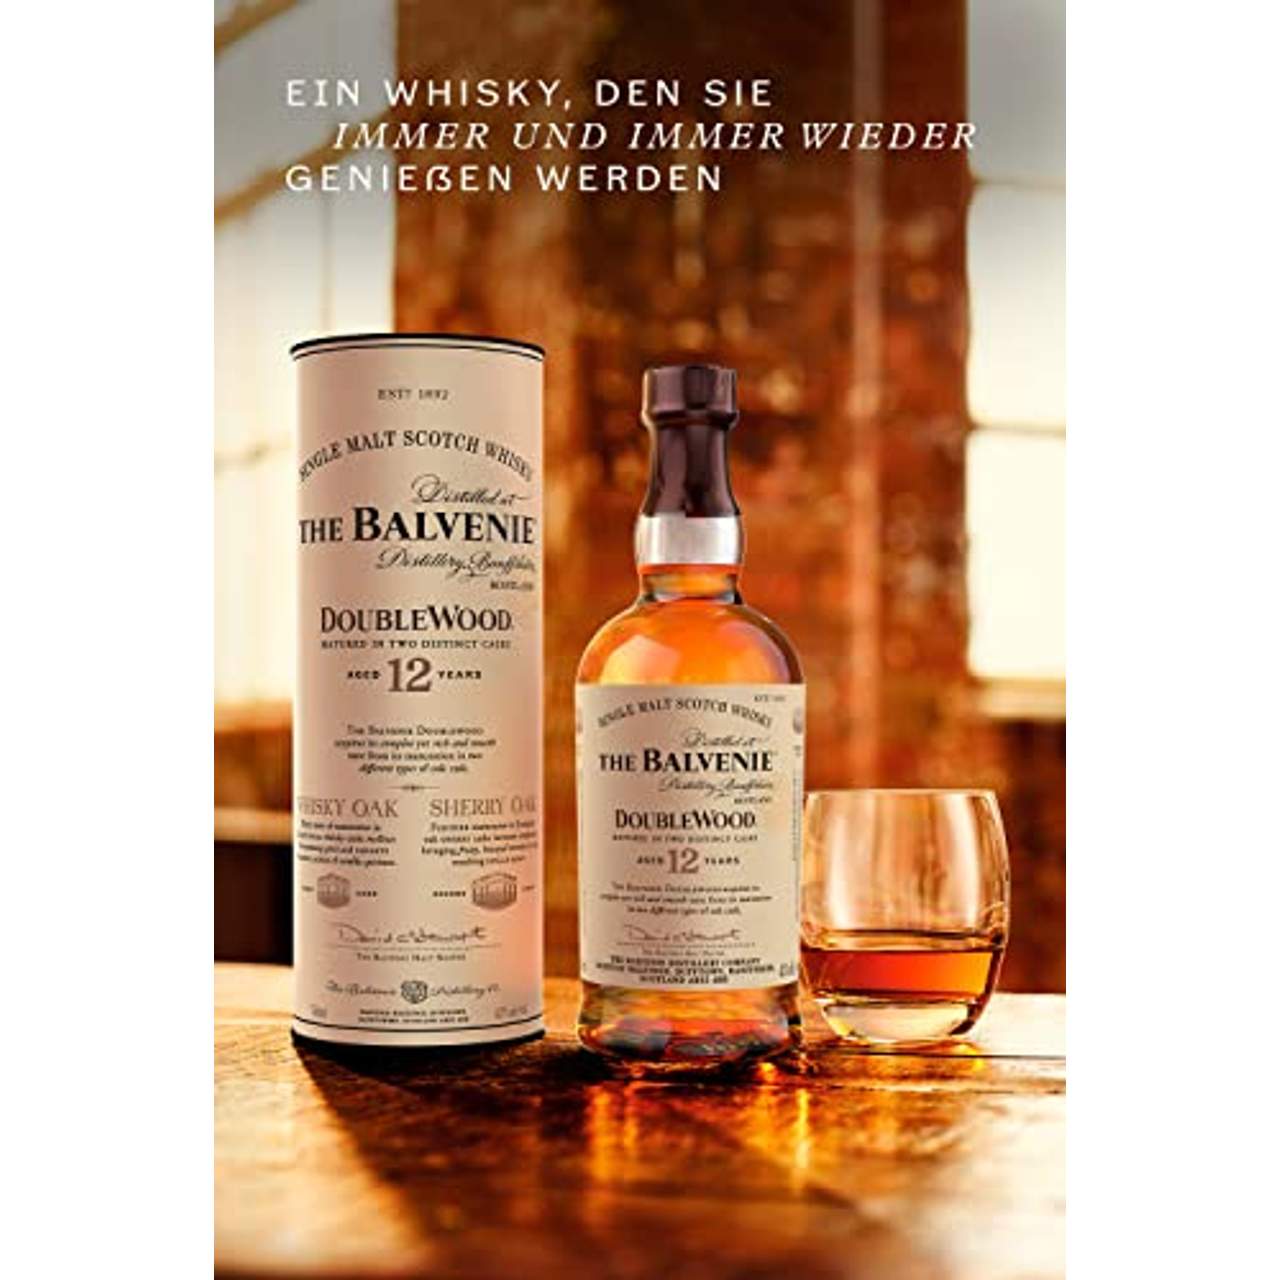 The Balvenie Doublewood Single Malt Scotch Whisky 12 Jahre